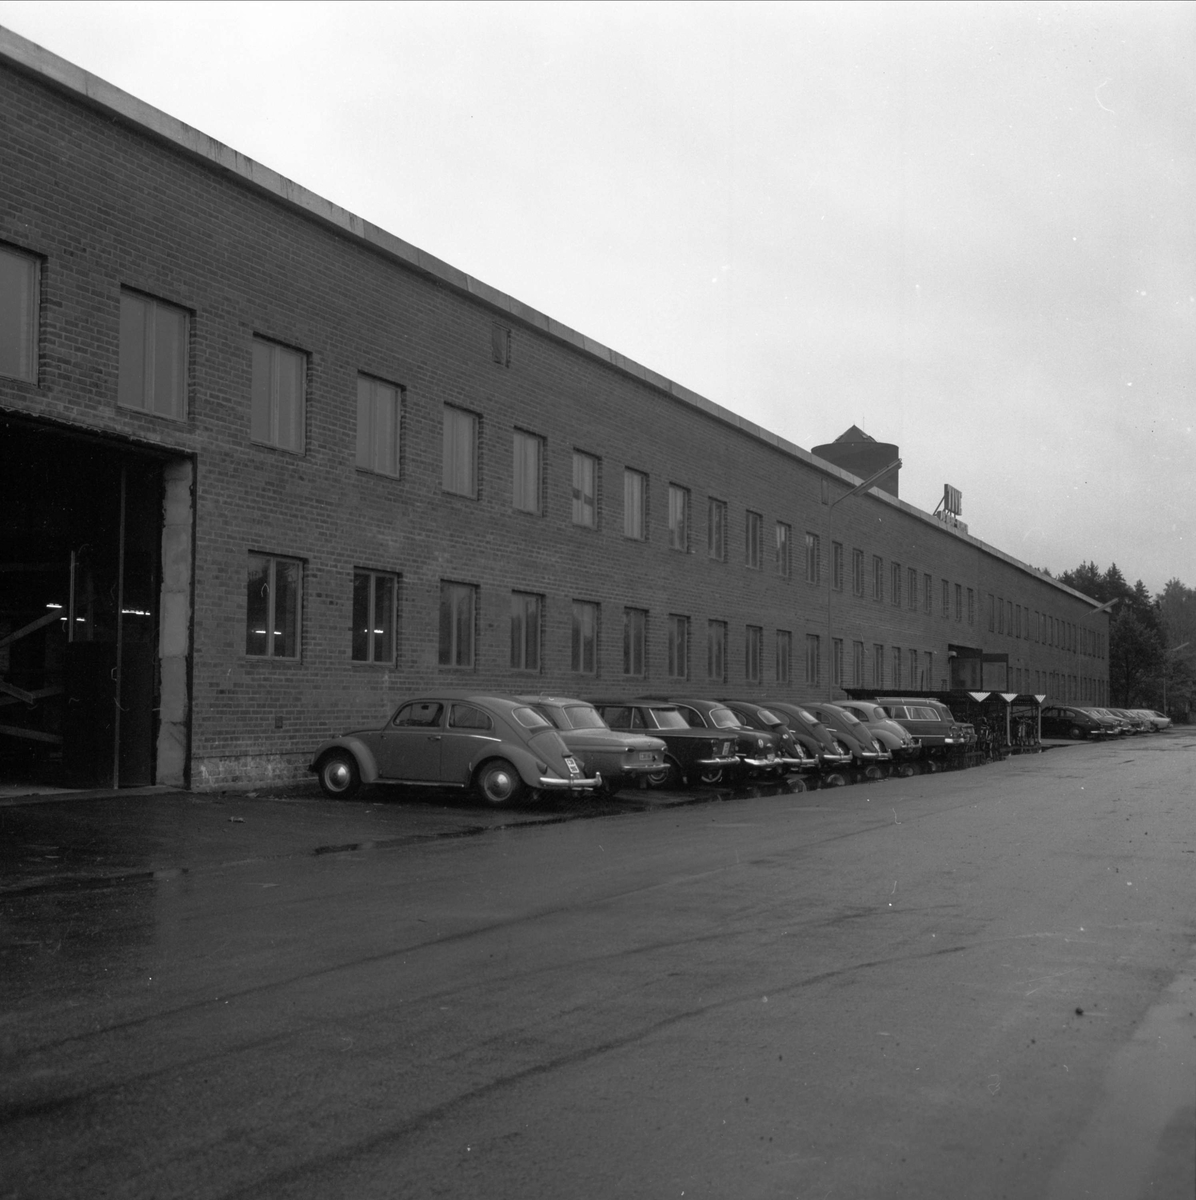 Tierpsverken expanderar, Tierp, Uppland oktober 1966